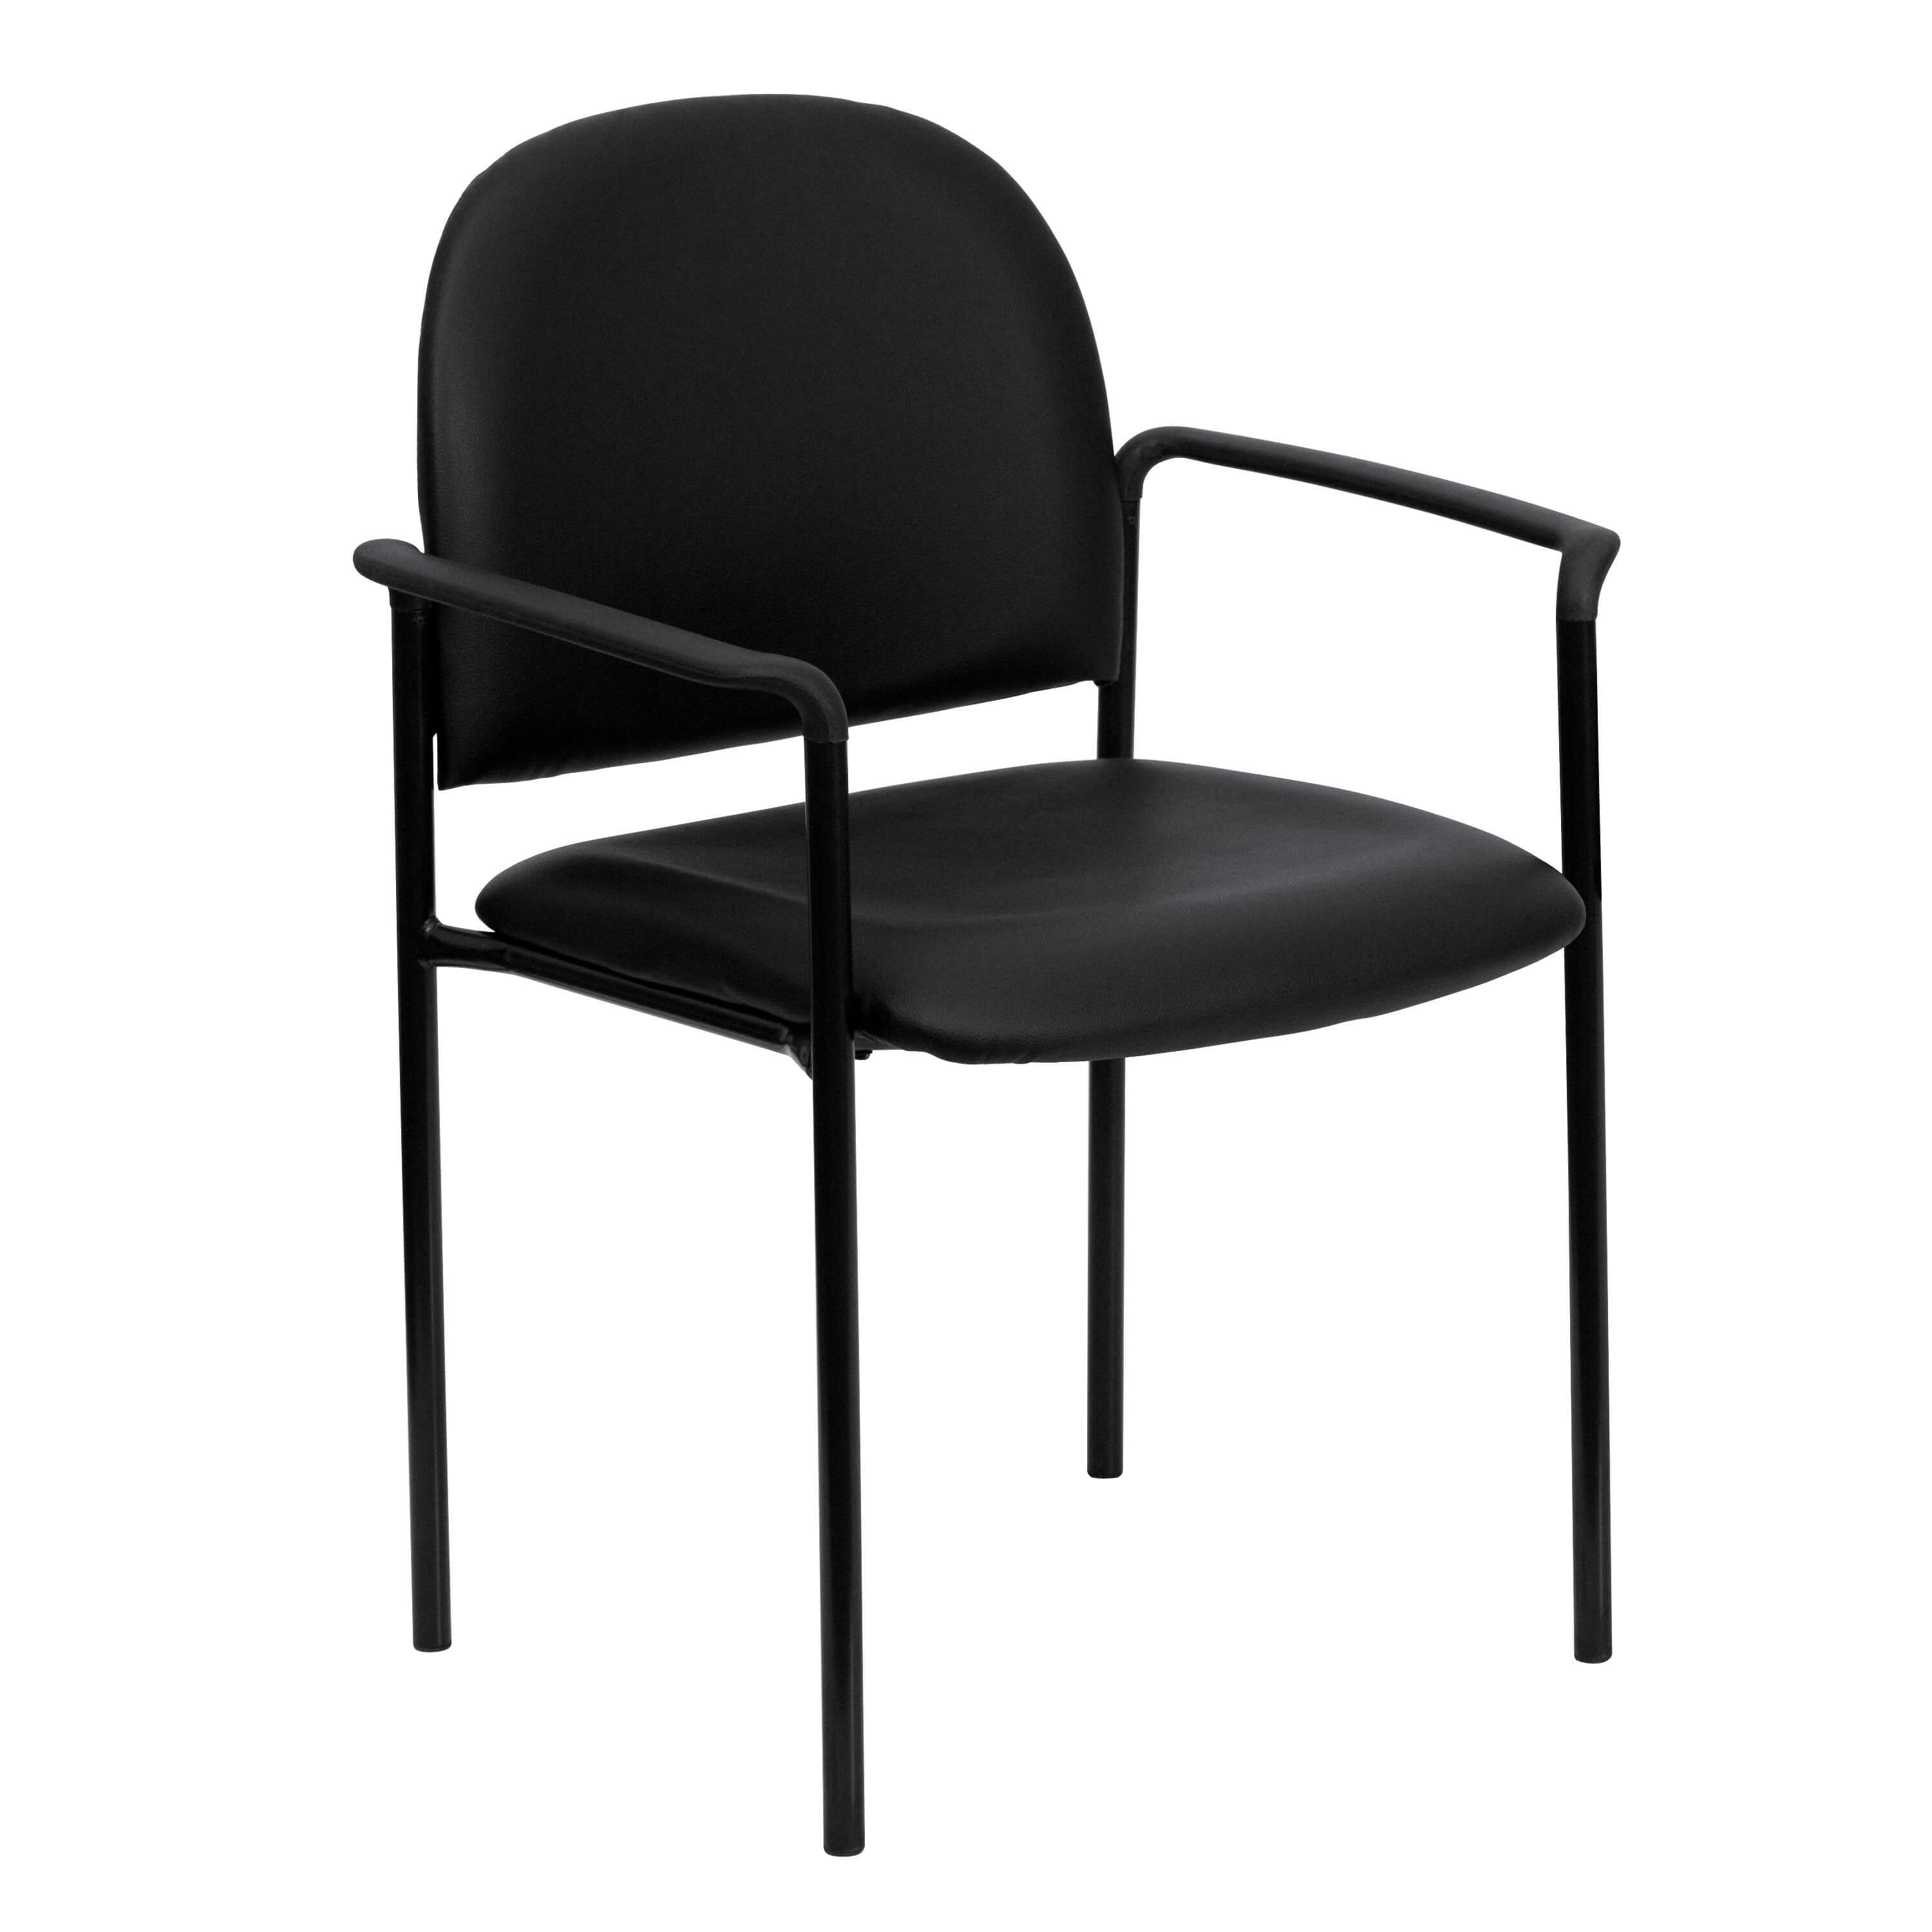 Stackable chairs CUB BT 516 1 VINYL GG FLA